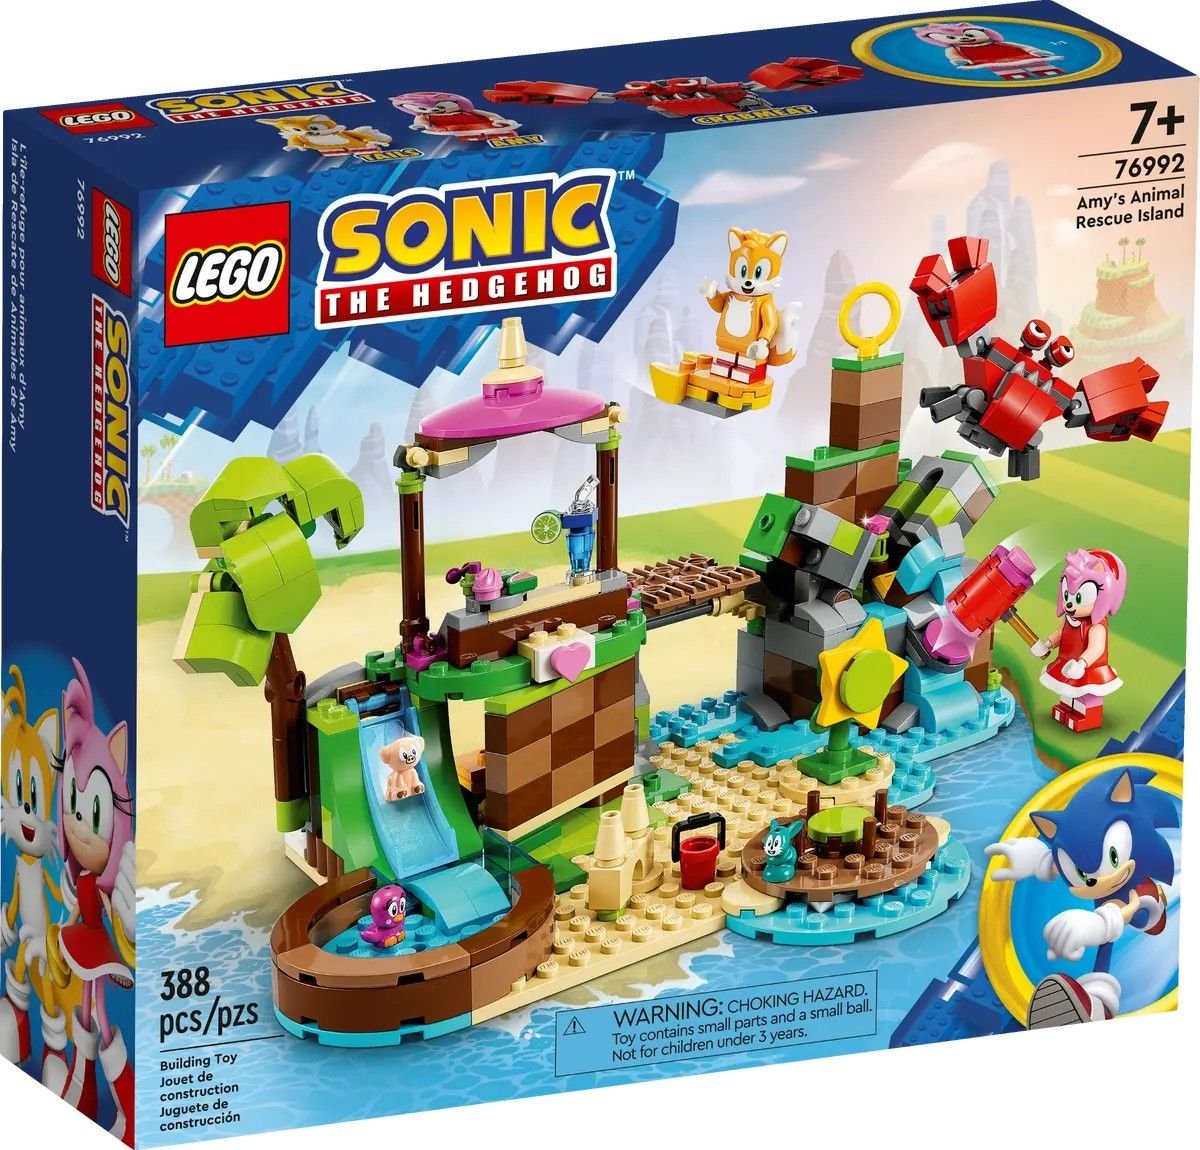 Amy's Animal Rescue Island LEGO Sonic the Hedgehog 76992